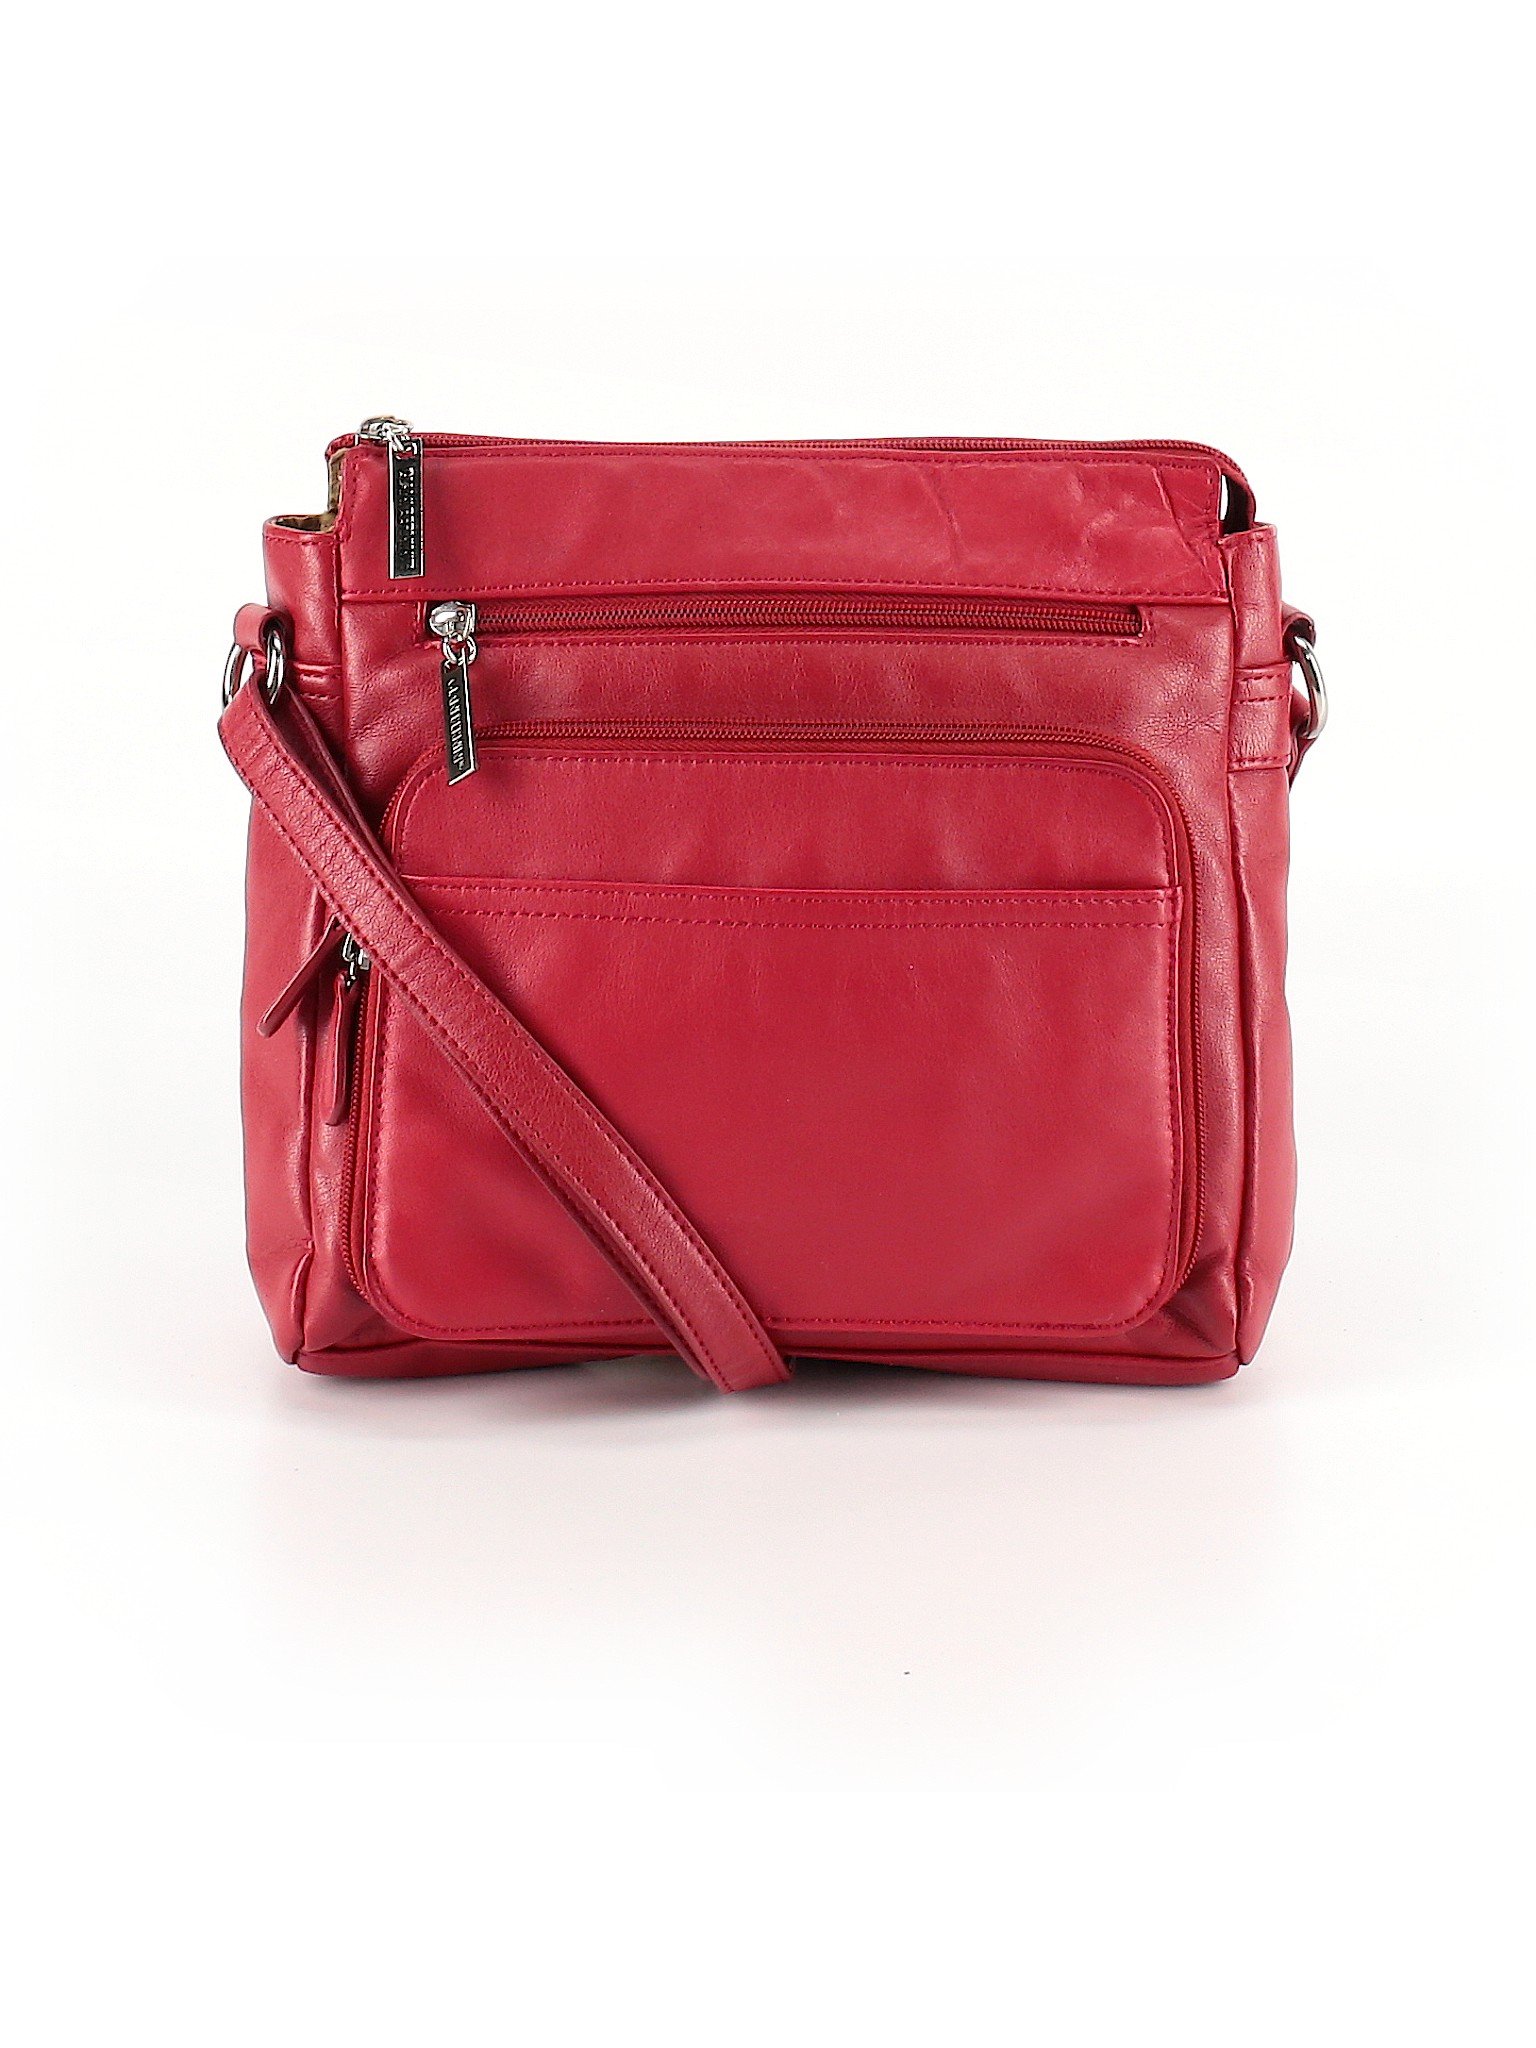 Giani Bernini Solid Red Crossbody Bag One Size - 72% off | thredUP